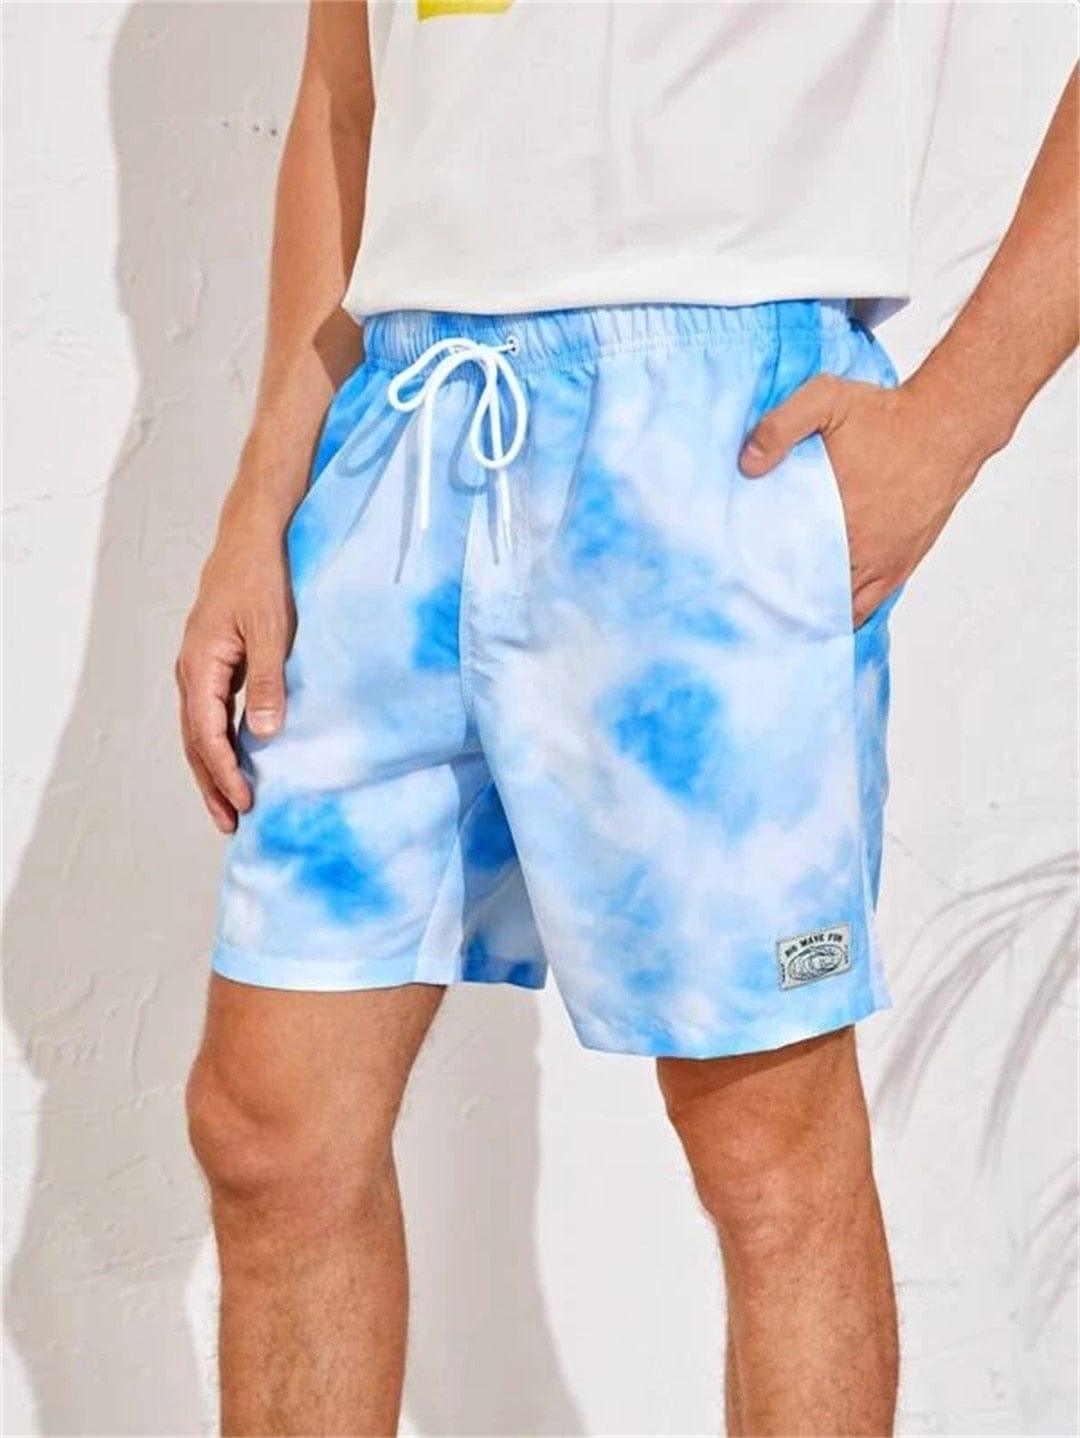 David swim shorts trunks (Plus sizes) Verso White & Blue S 